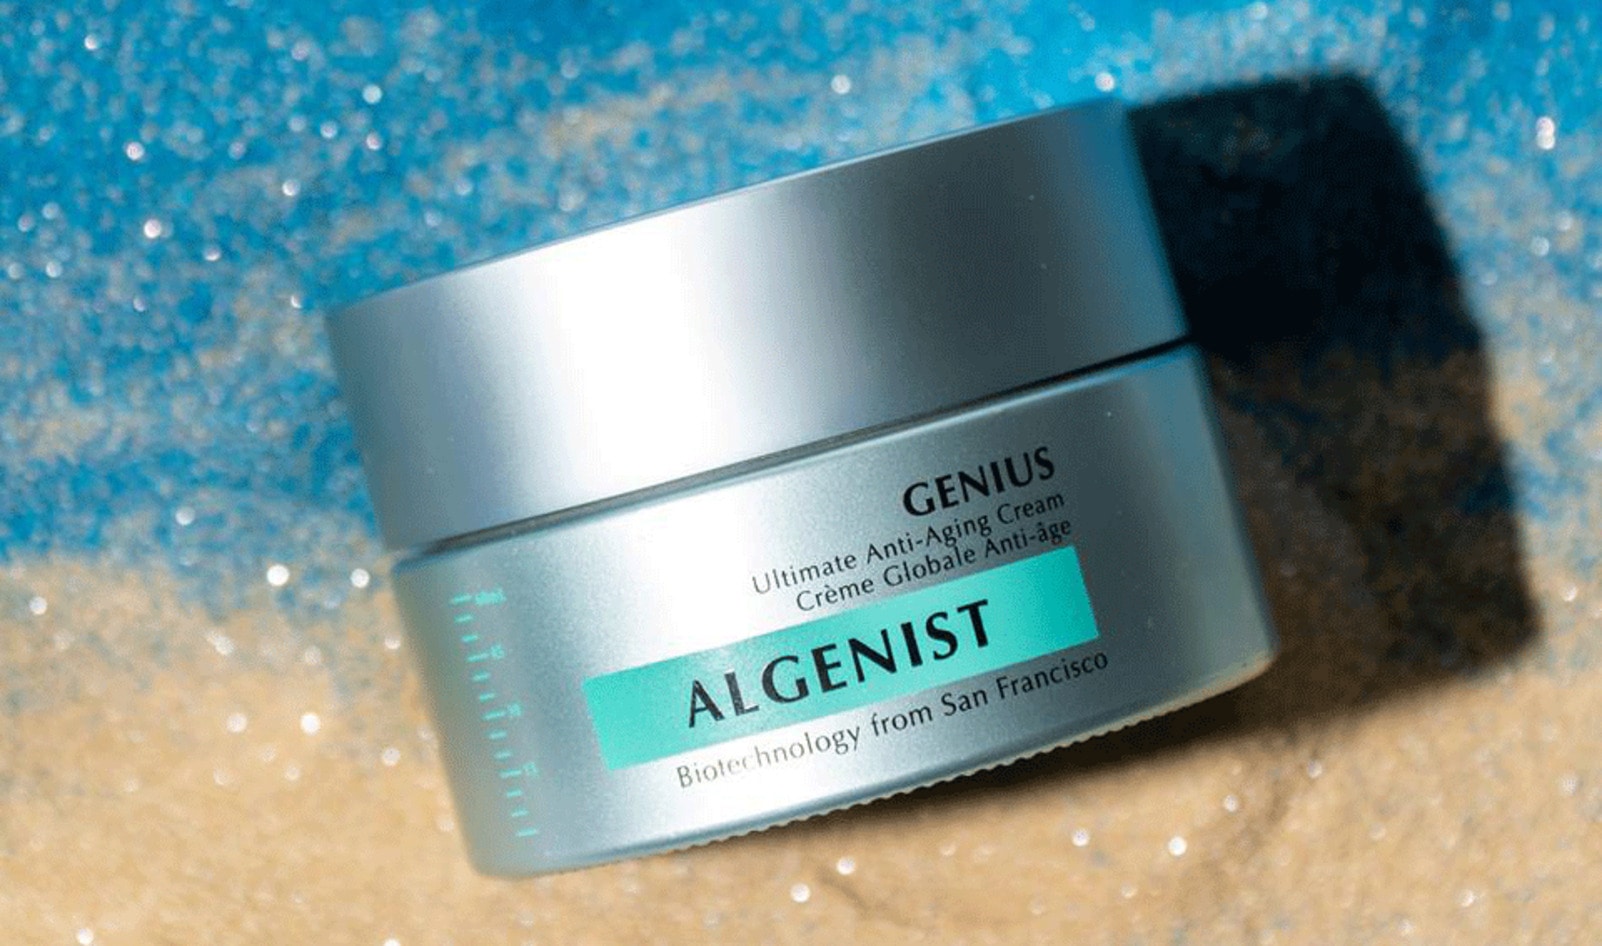 Algae Skincare Brand Goes Vegan, Debuts Plant-Based Collagen